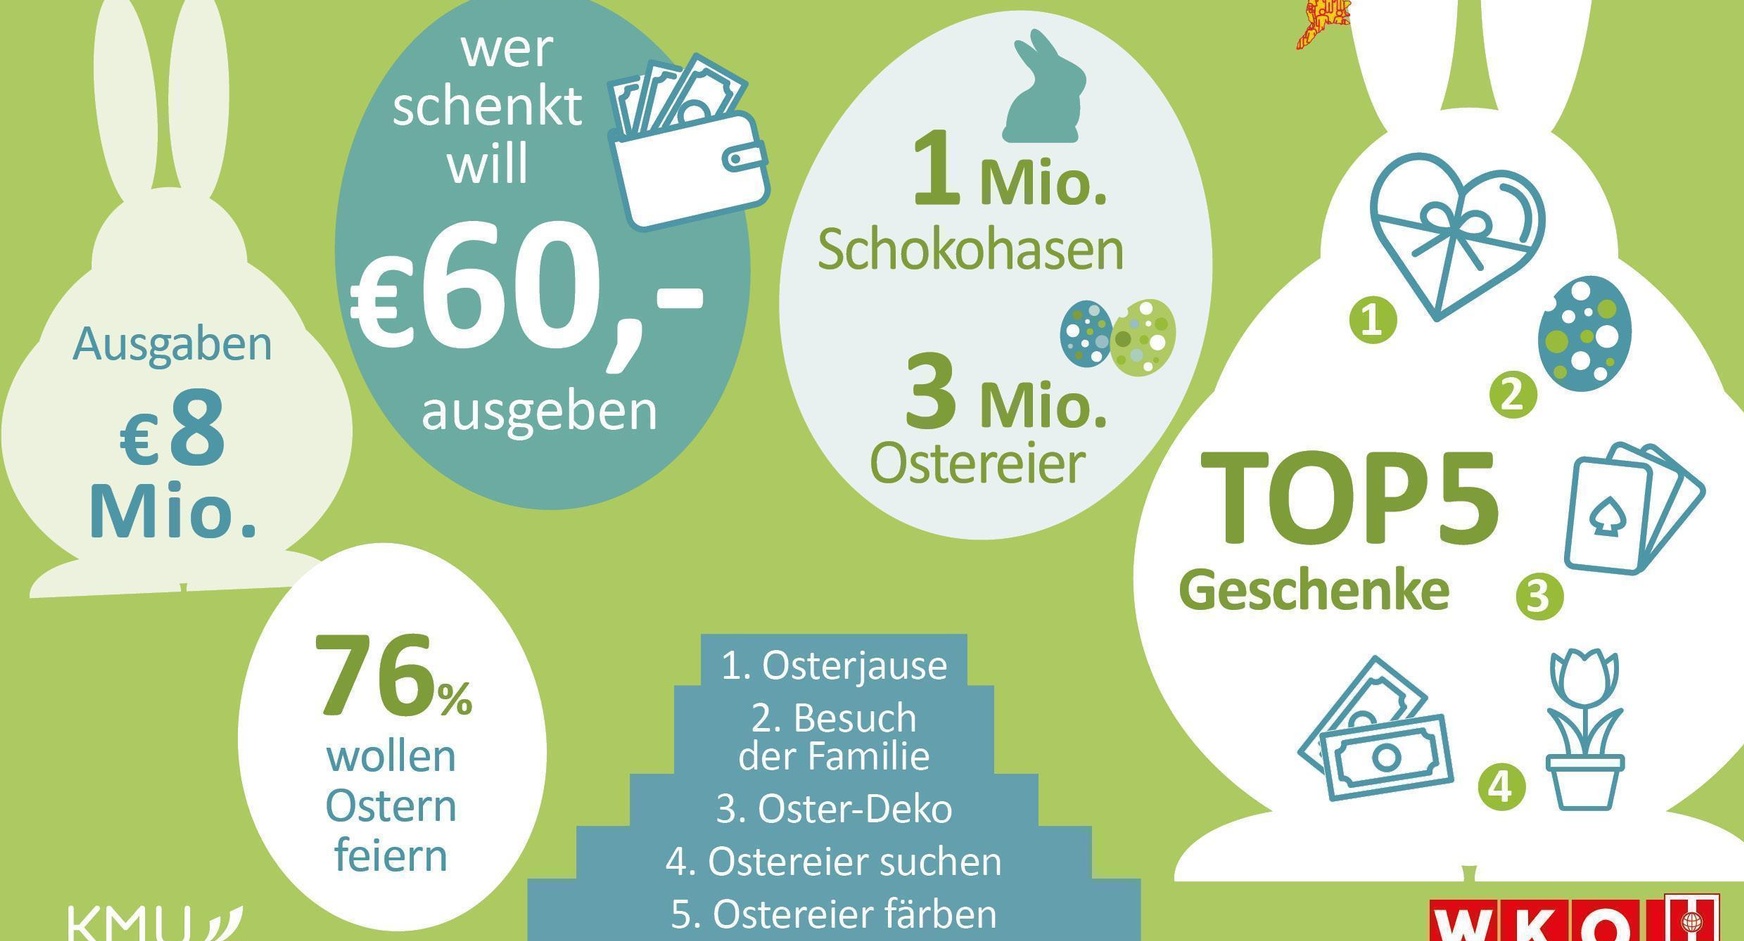 Ostern im Burgenland - Infografik 